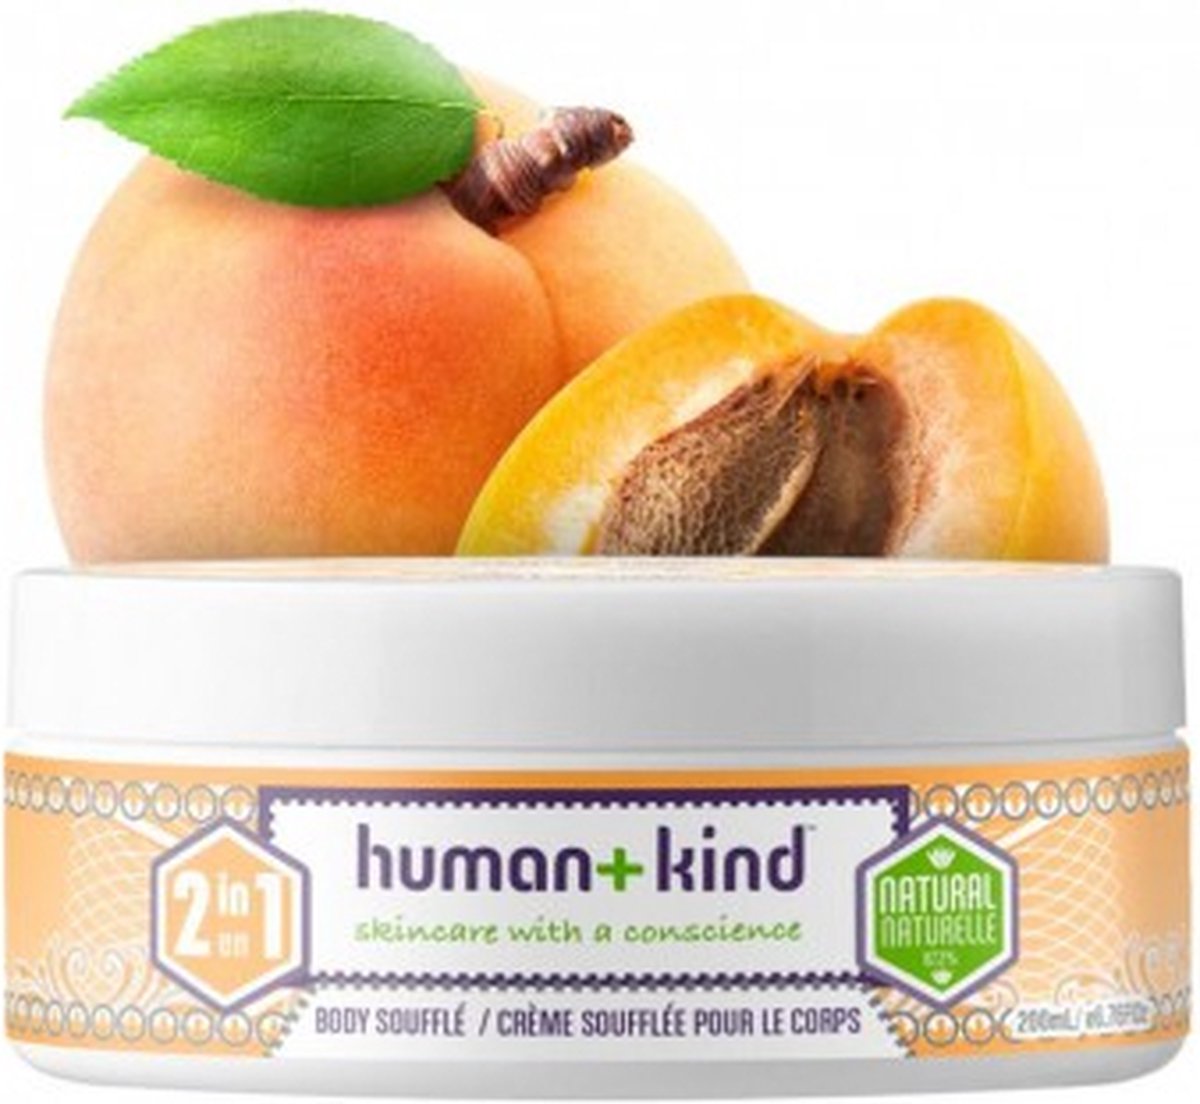 Human + Kind - Body Souffle Vegan 200ml